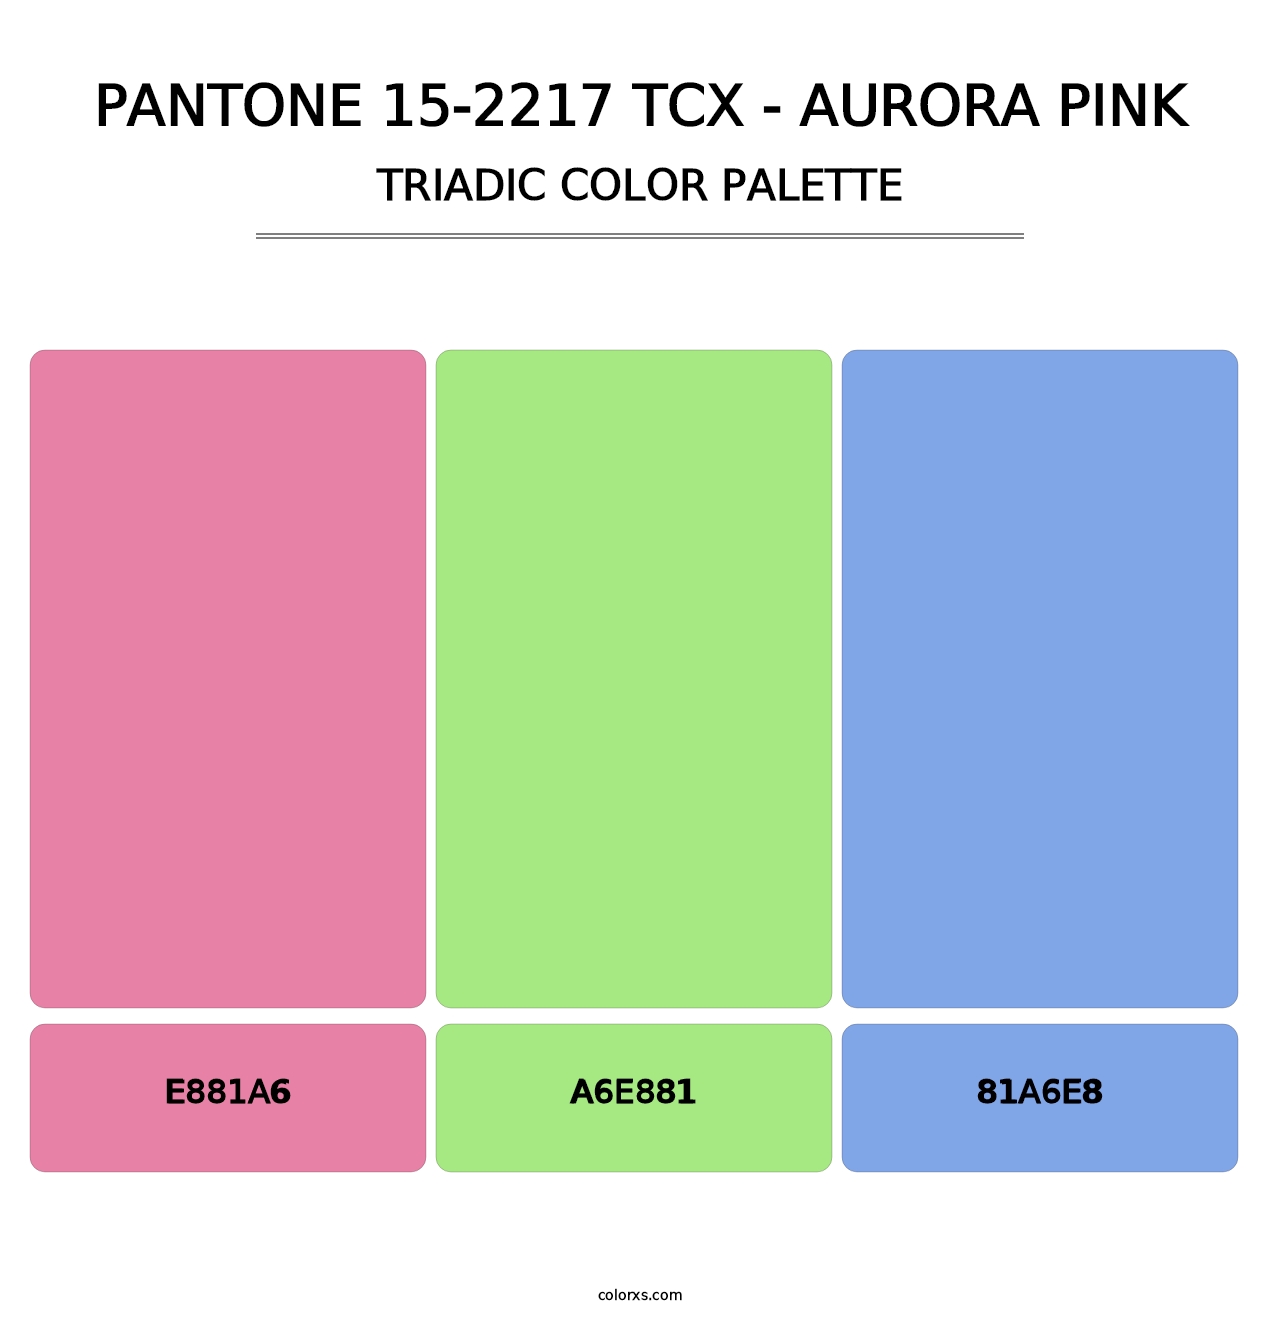 PANTONE 15-2217 TCX - Aurora Pink - Triadic Color Palette